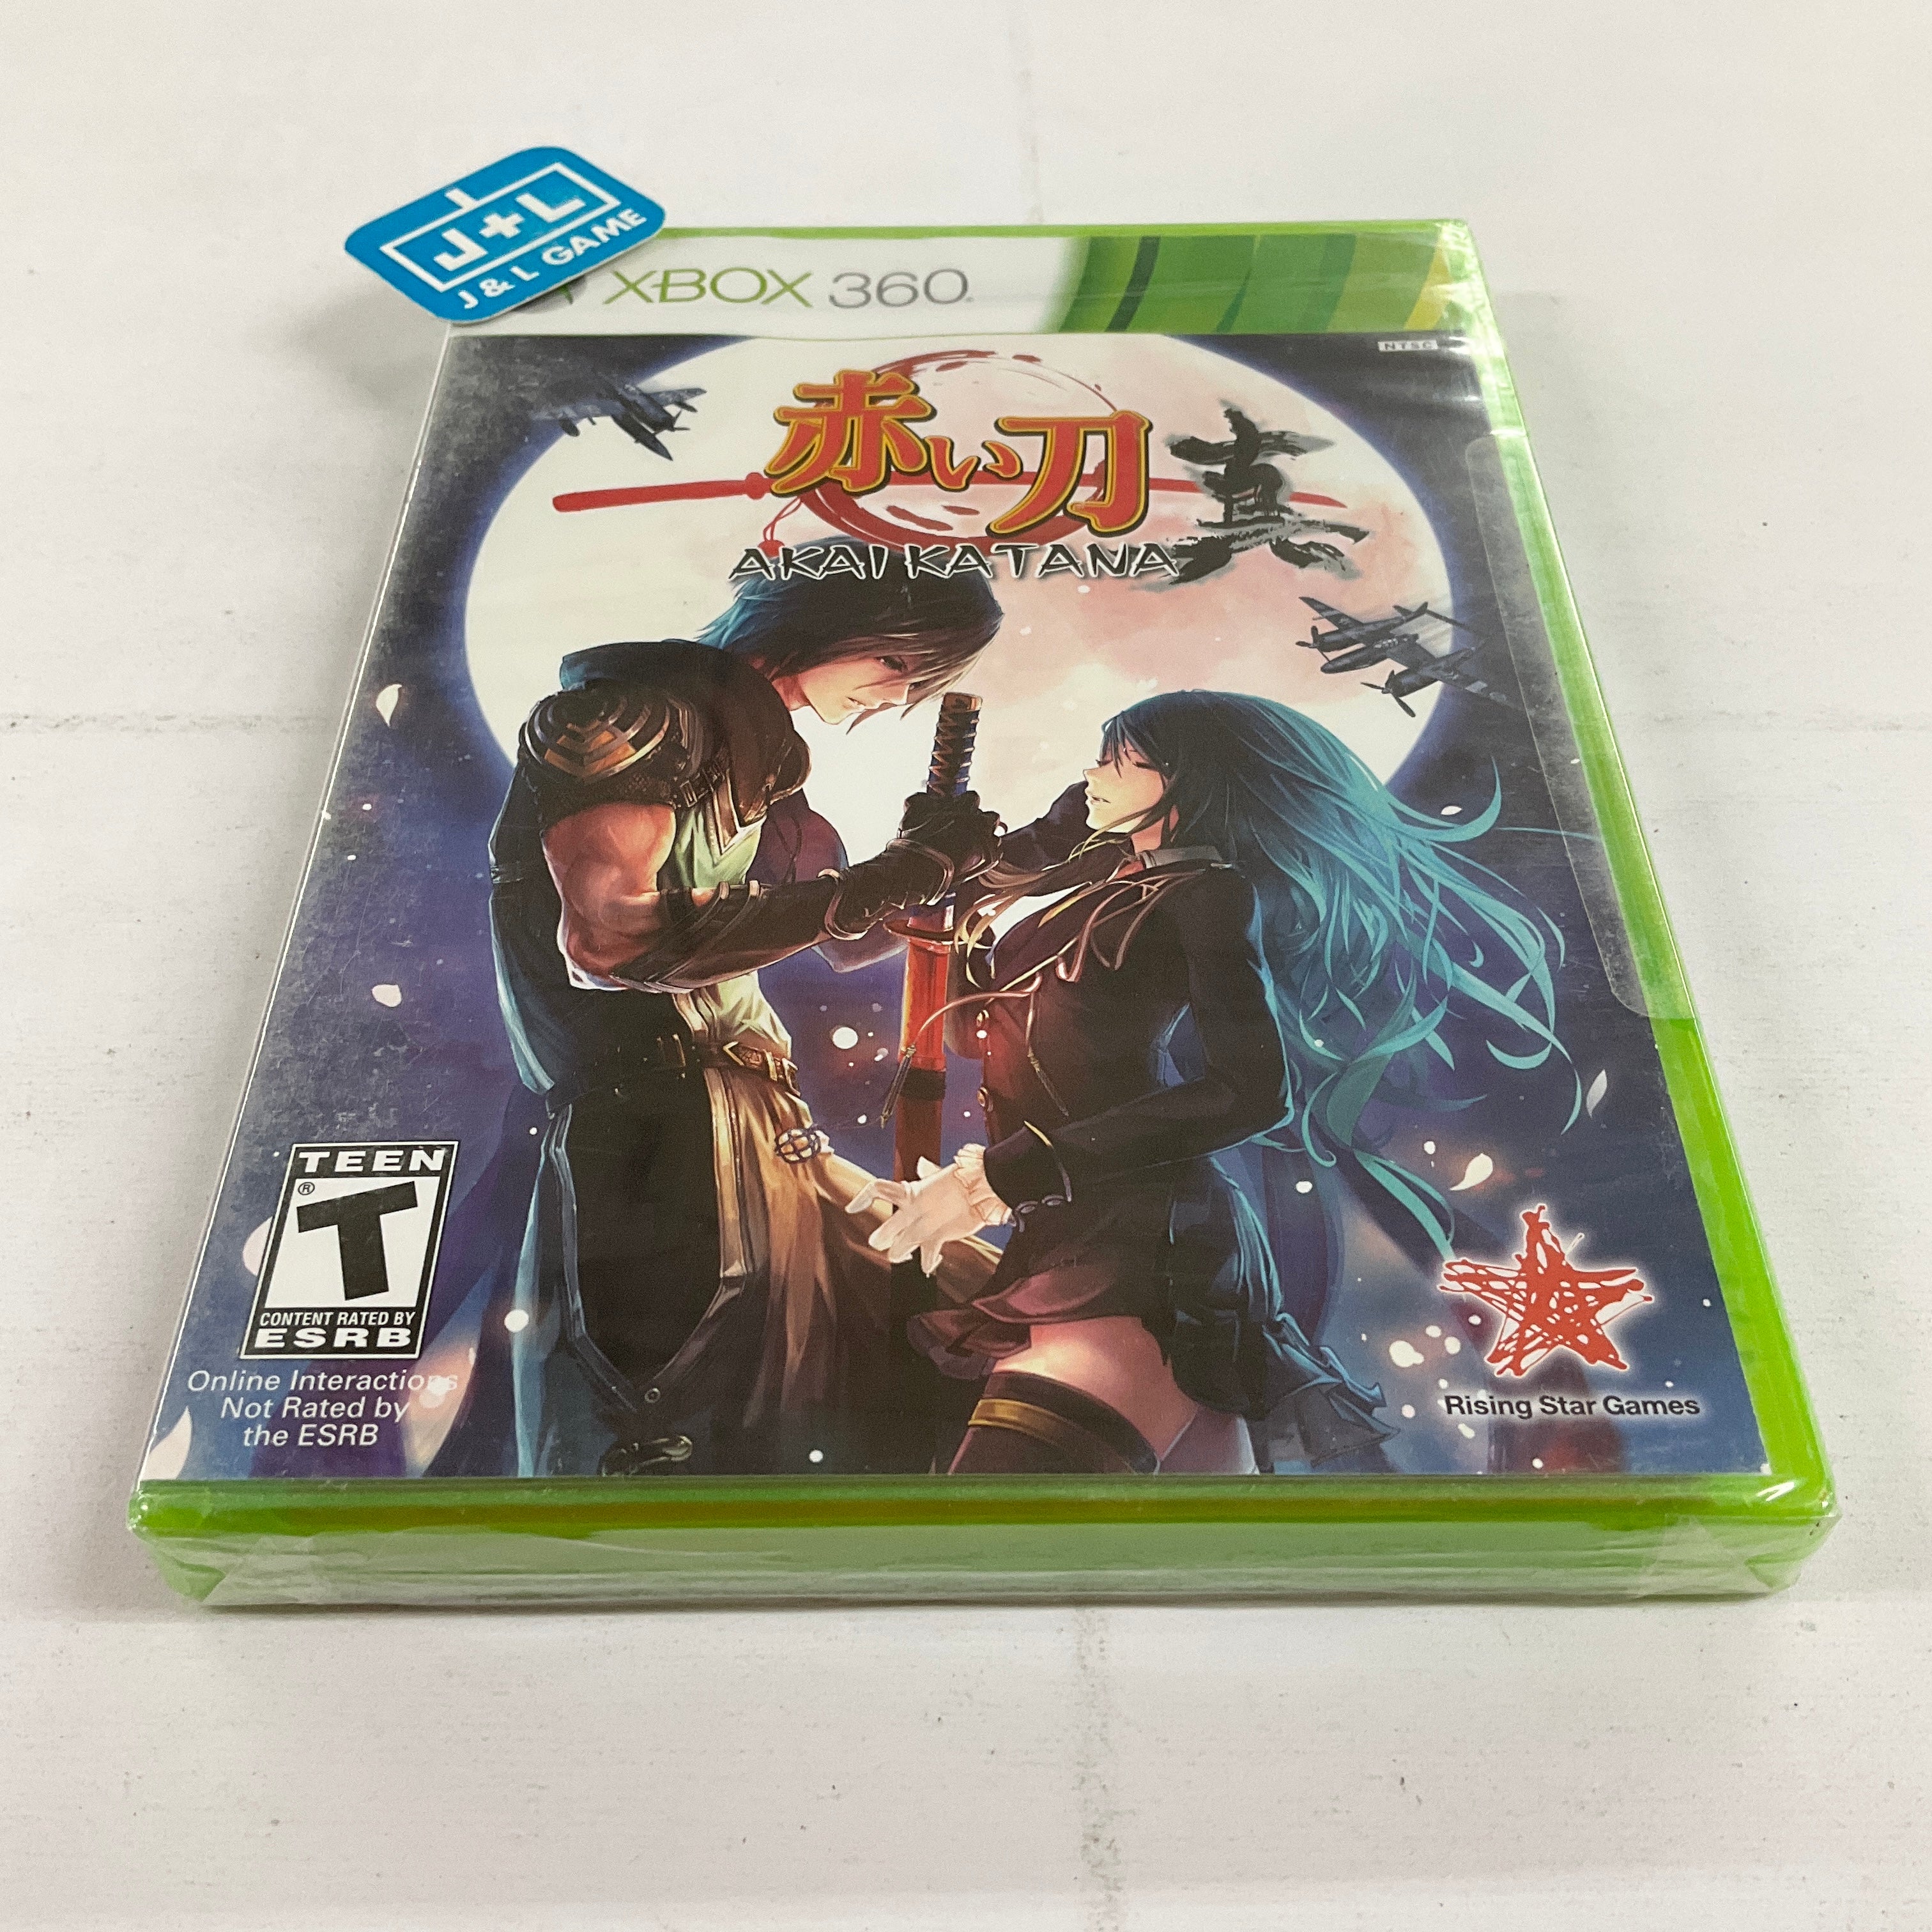 Akai Katana - Xbox 360 Video Games Rising Star Games   